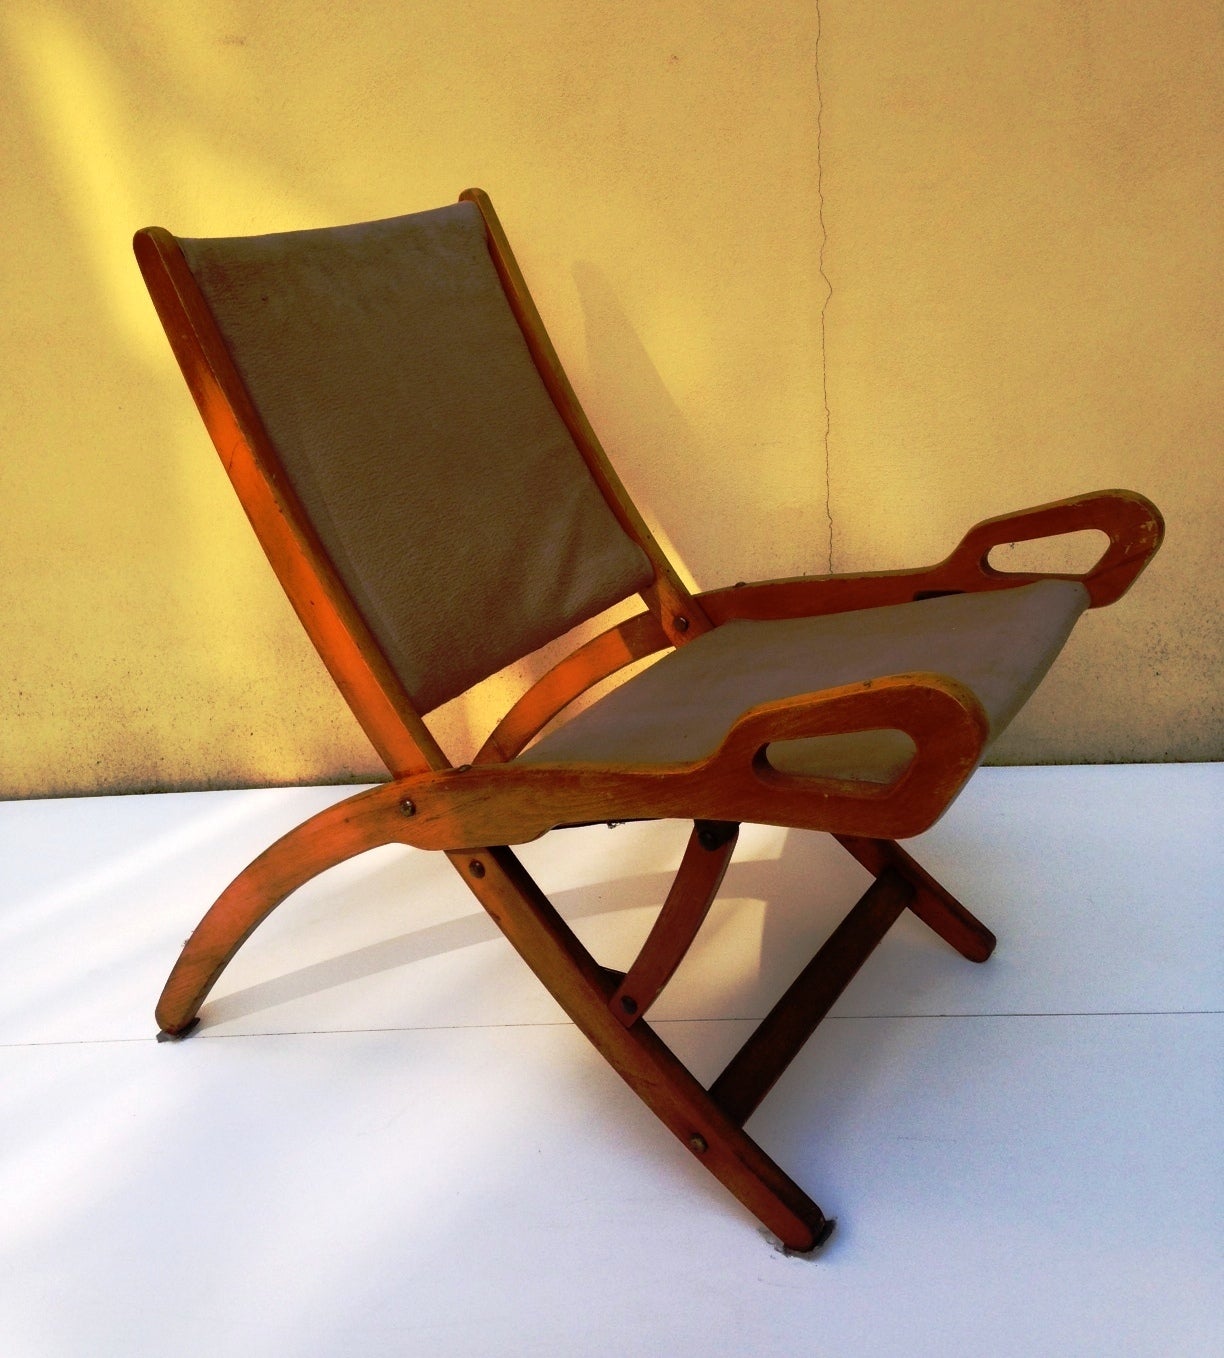 Gio Ponti folding chair, designed in 1958 for Fratelli Reguitti.
Original conditions.